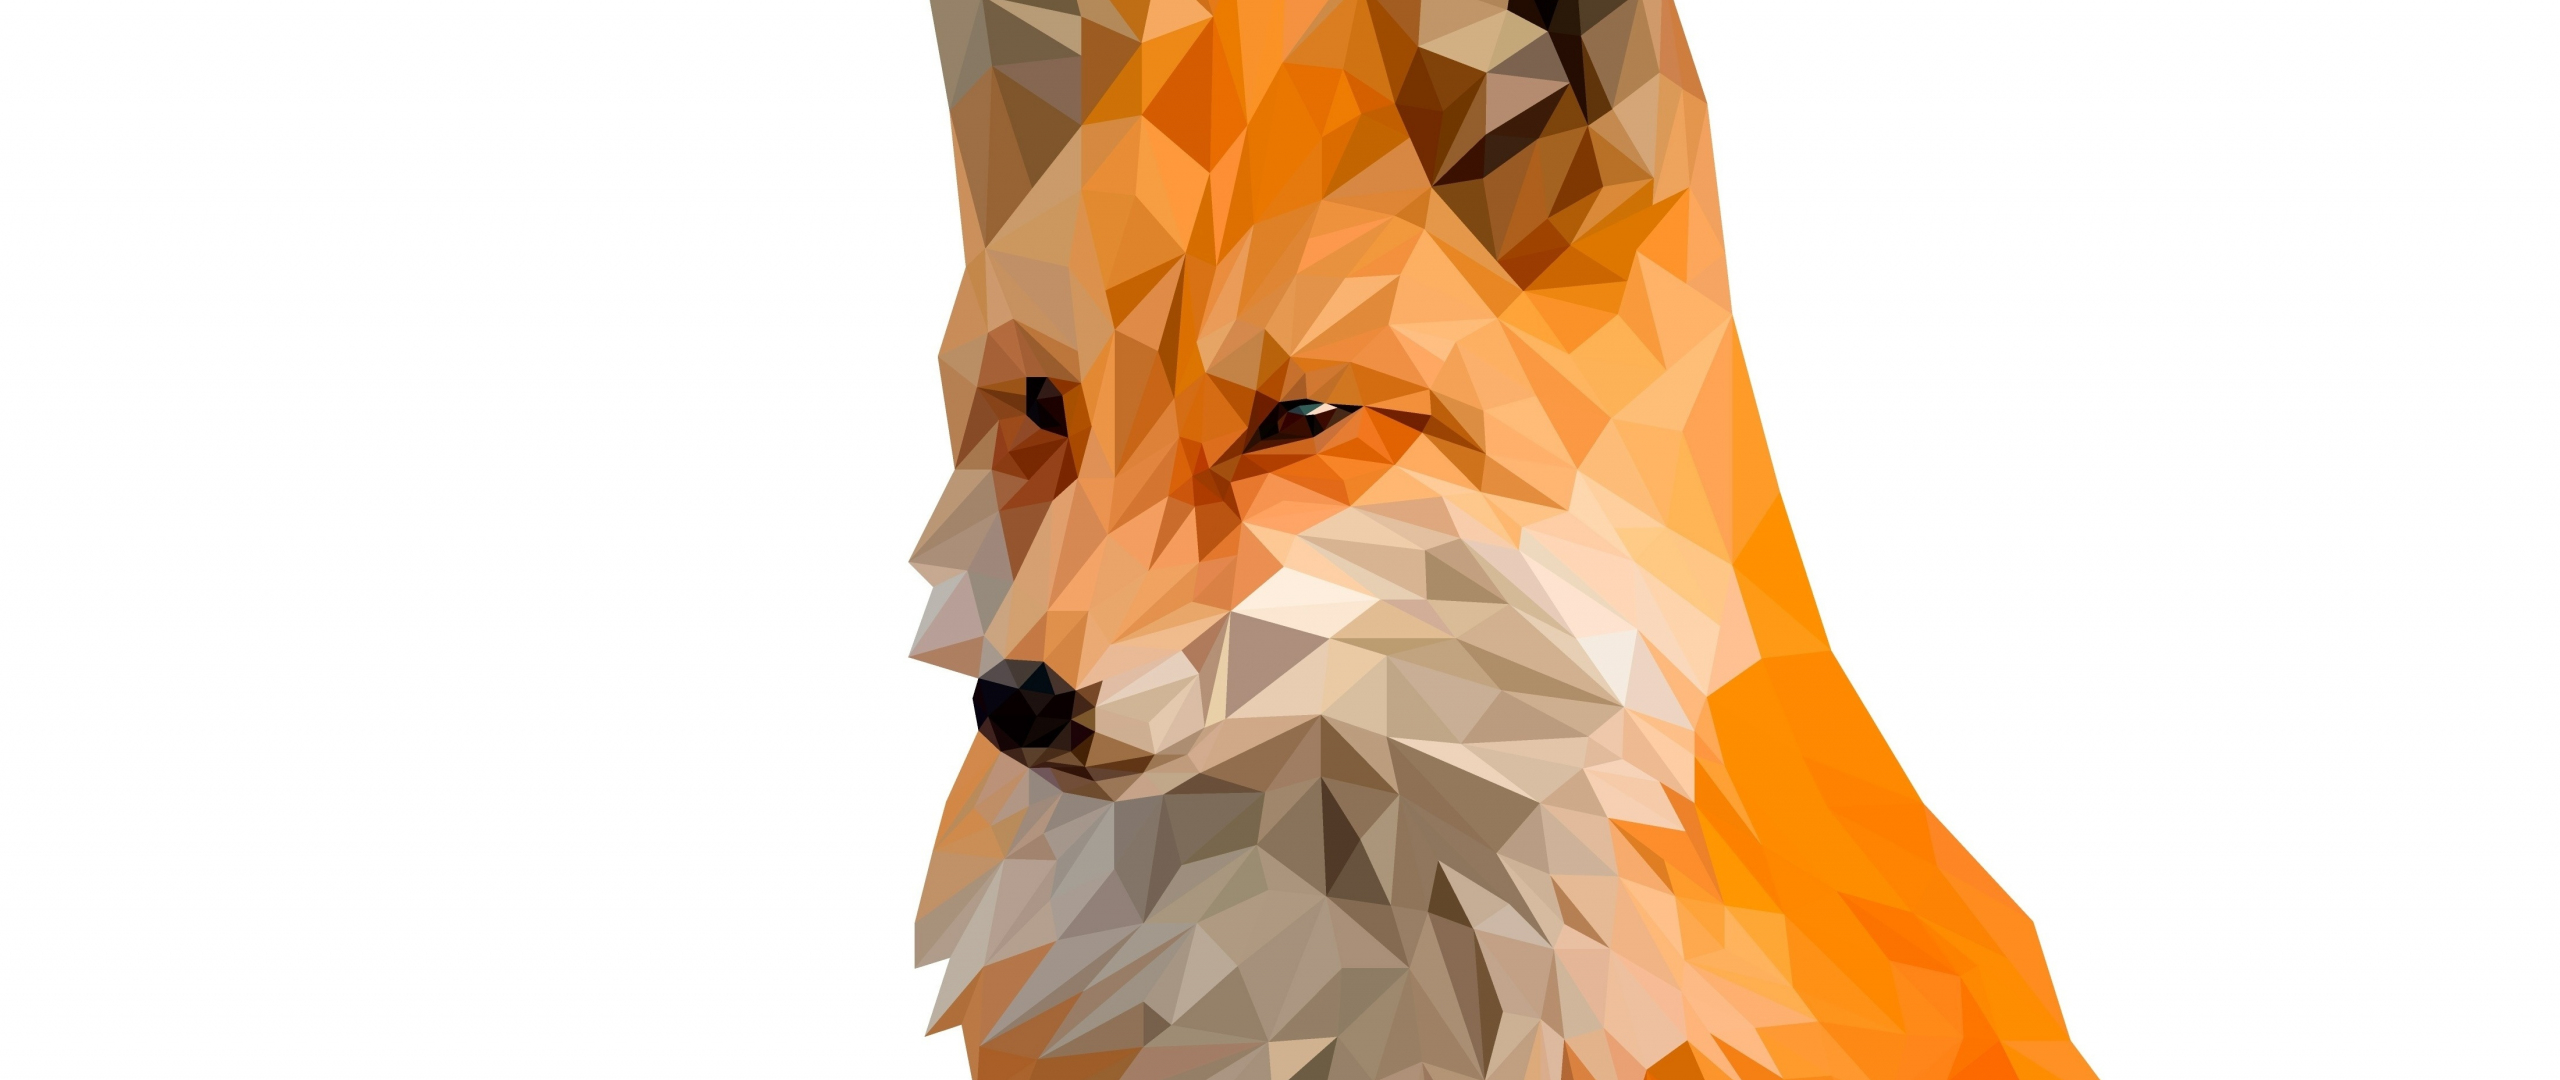 Fox, muzzle, digital art, low poly, 2560x1080 wallpaper